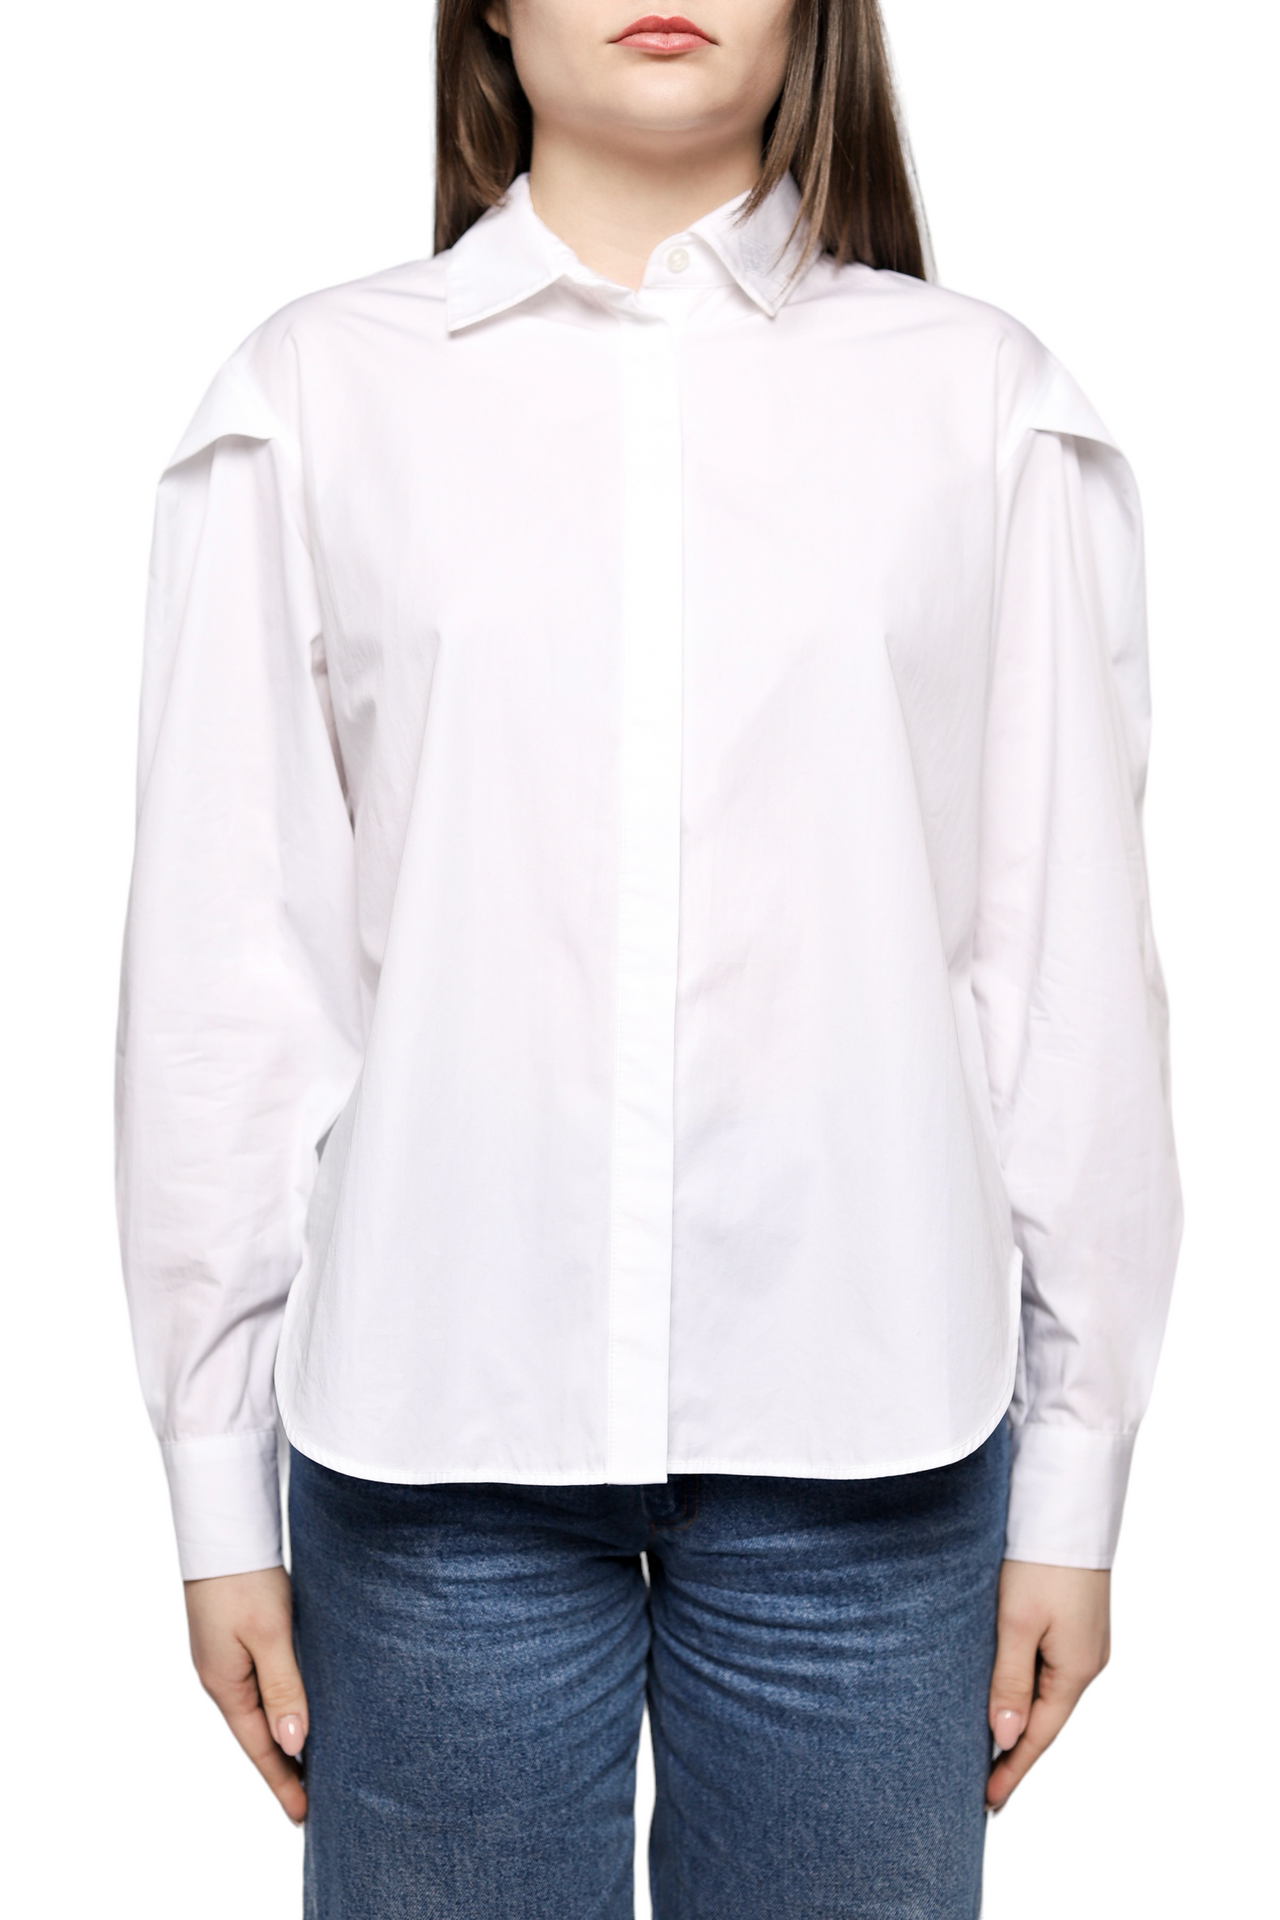 Toteme Priola Shirt White